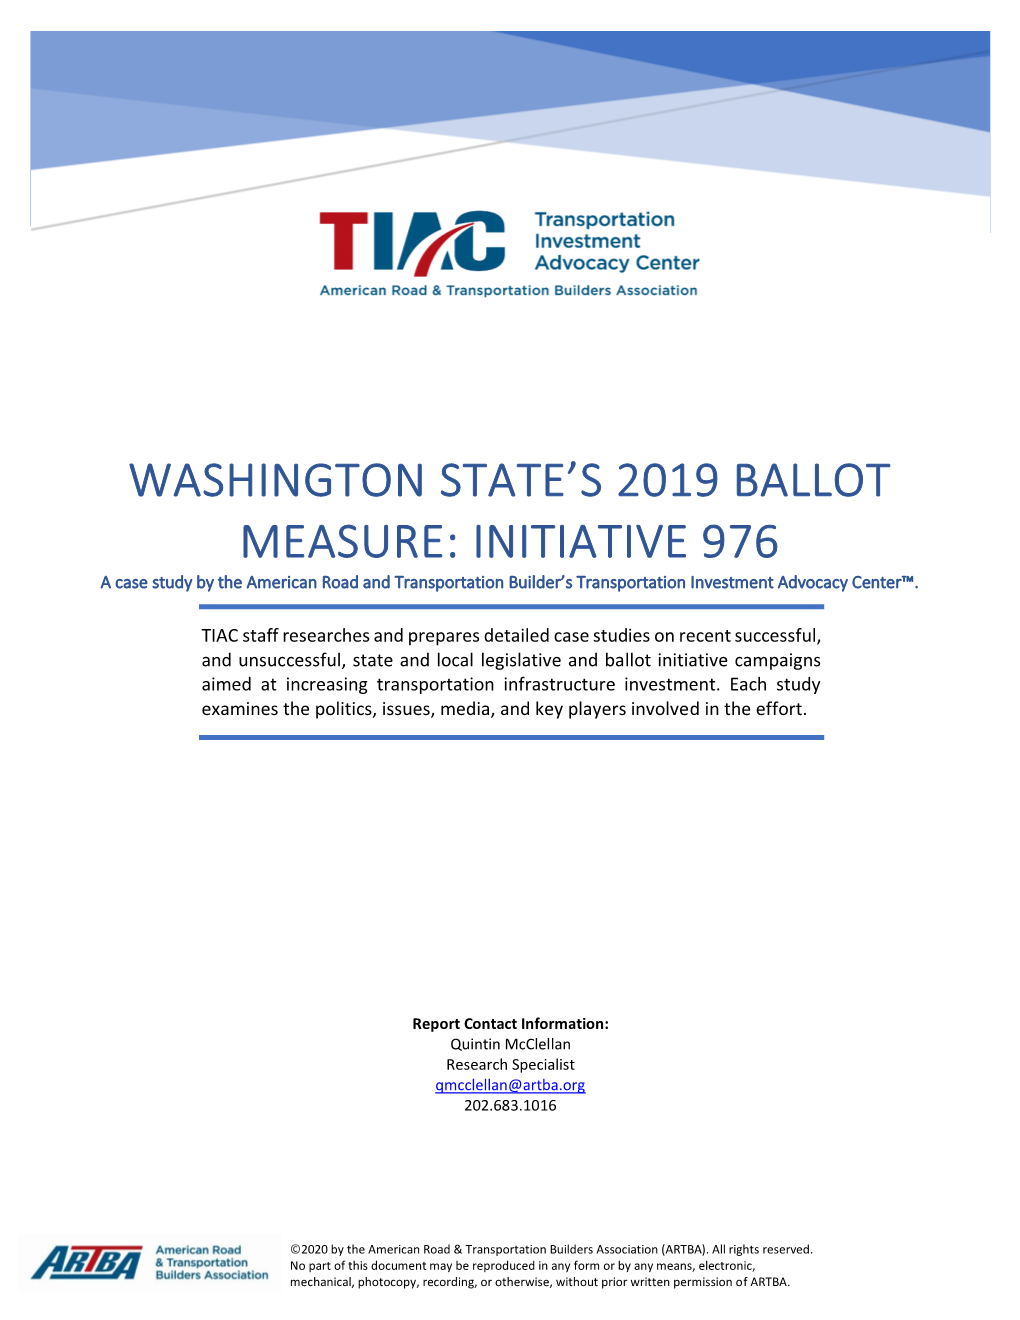 Washington State's 2019 Ballot Measure: Initiative